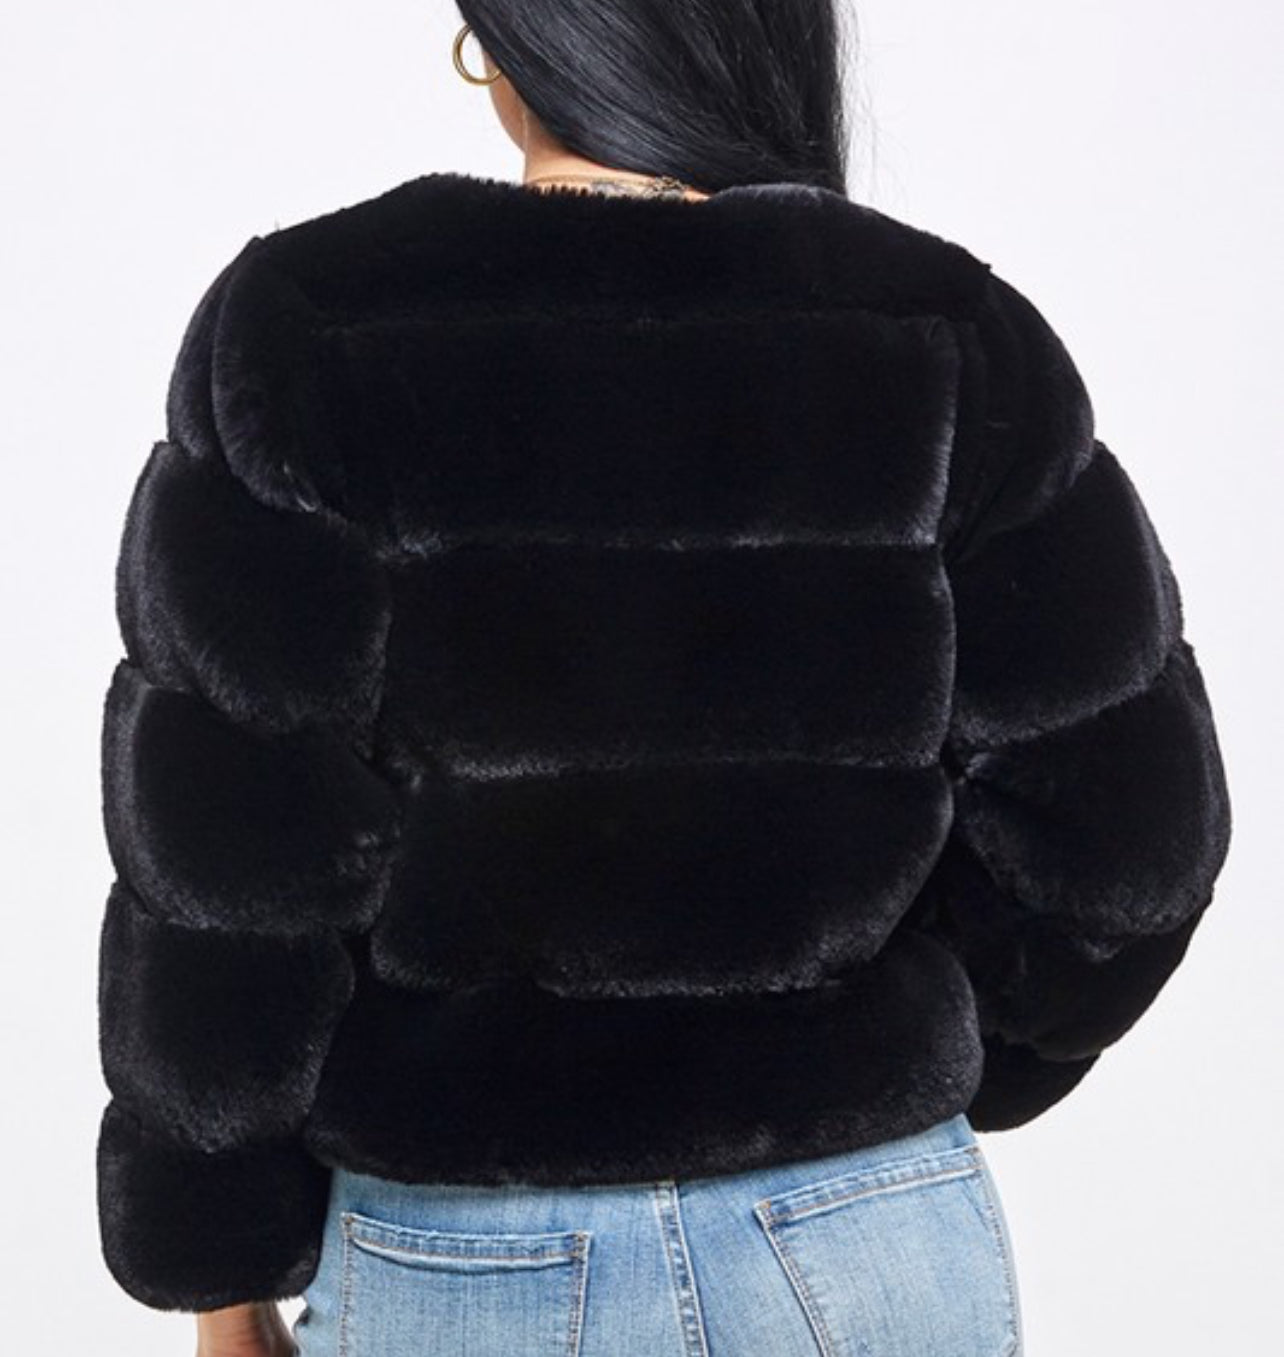 Cute sexy faux fur coat